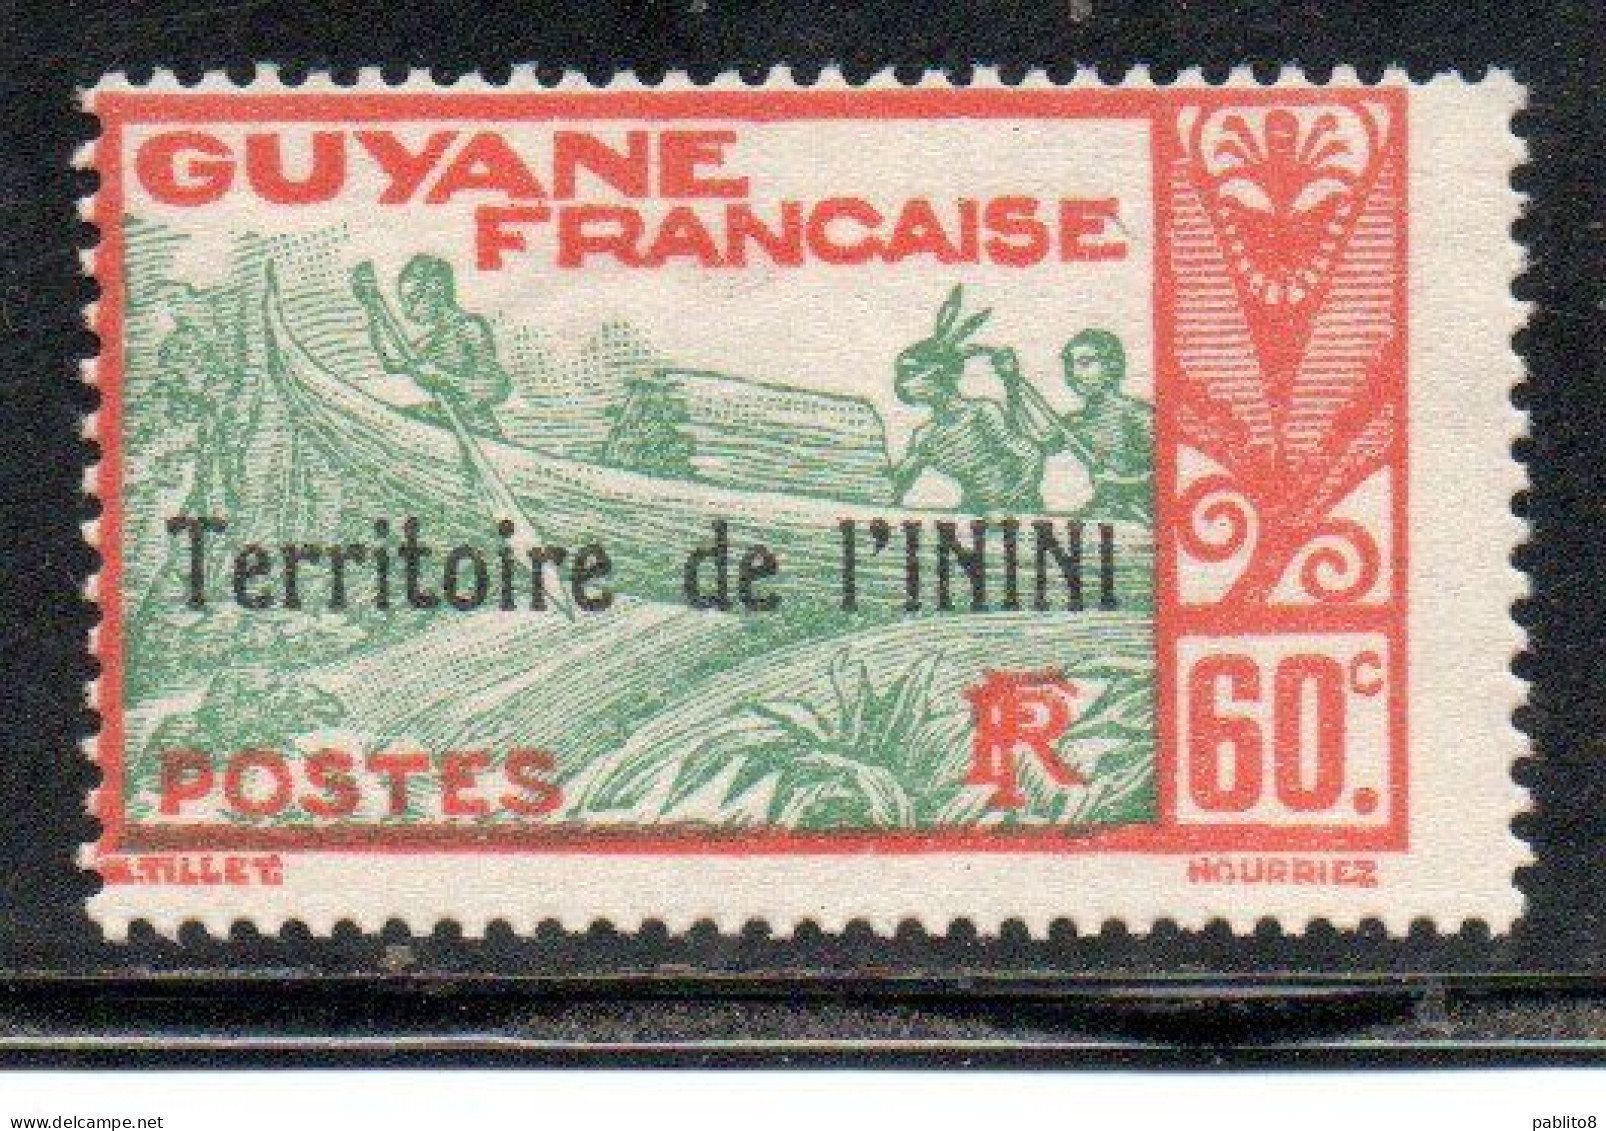 GUYANE FRANCAISE TERRITOIRE DE L'ININI OVERPRINTED SURCHARGE 1932 1940 SHOOTING RAPIDS MARONI RIVER 60c MNH - Unused Stamps